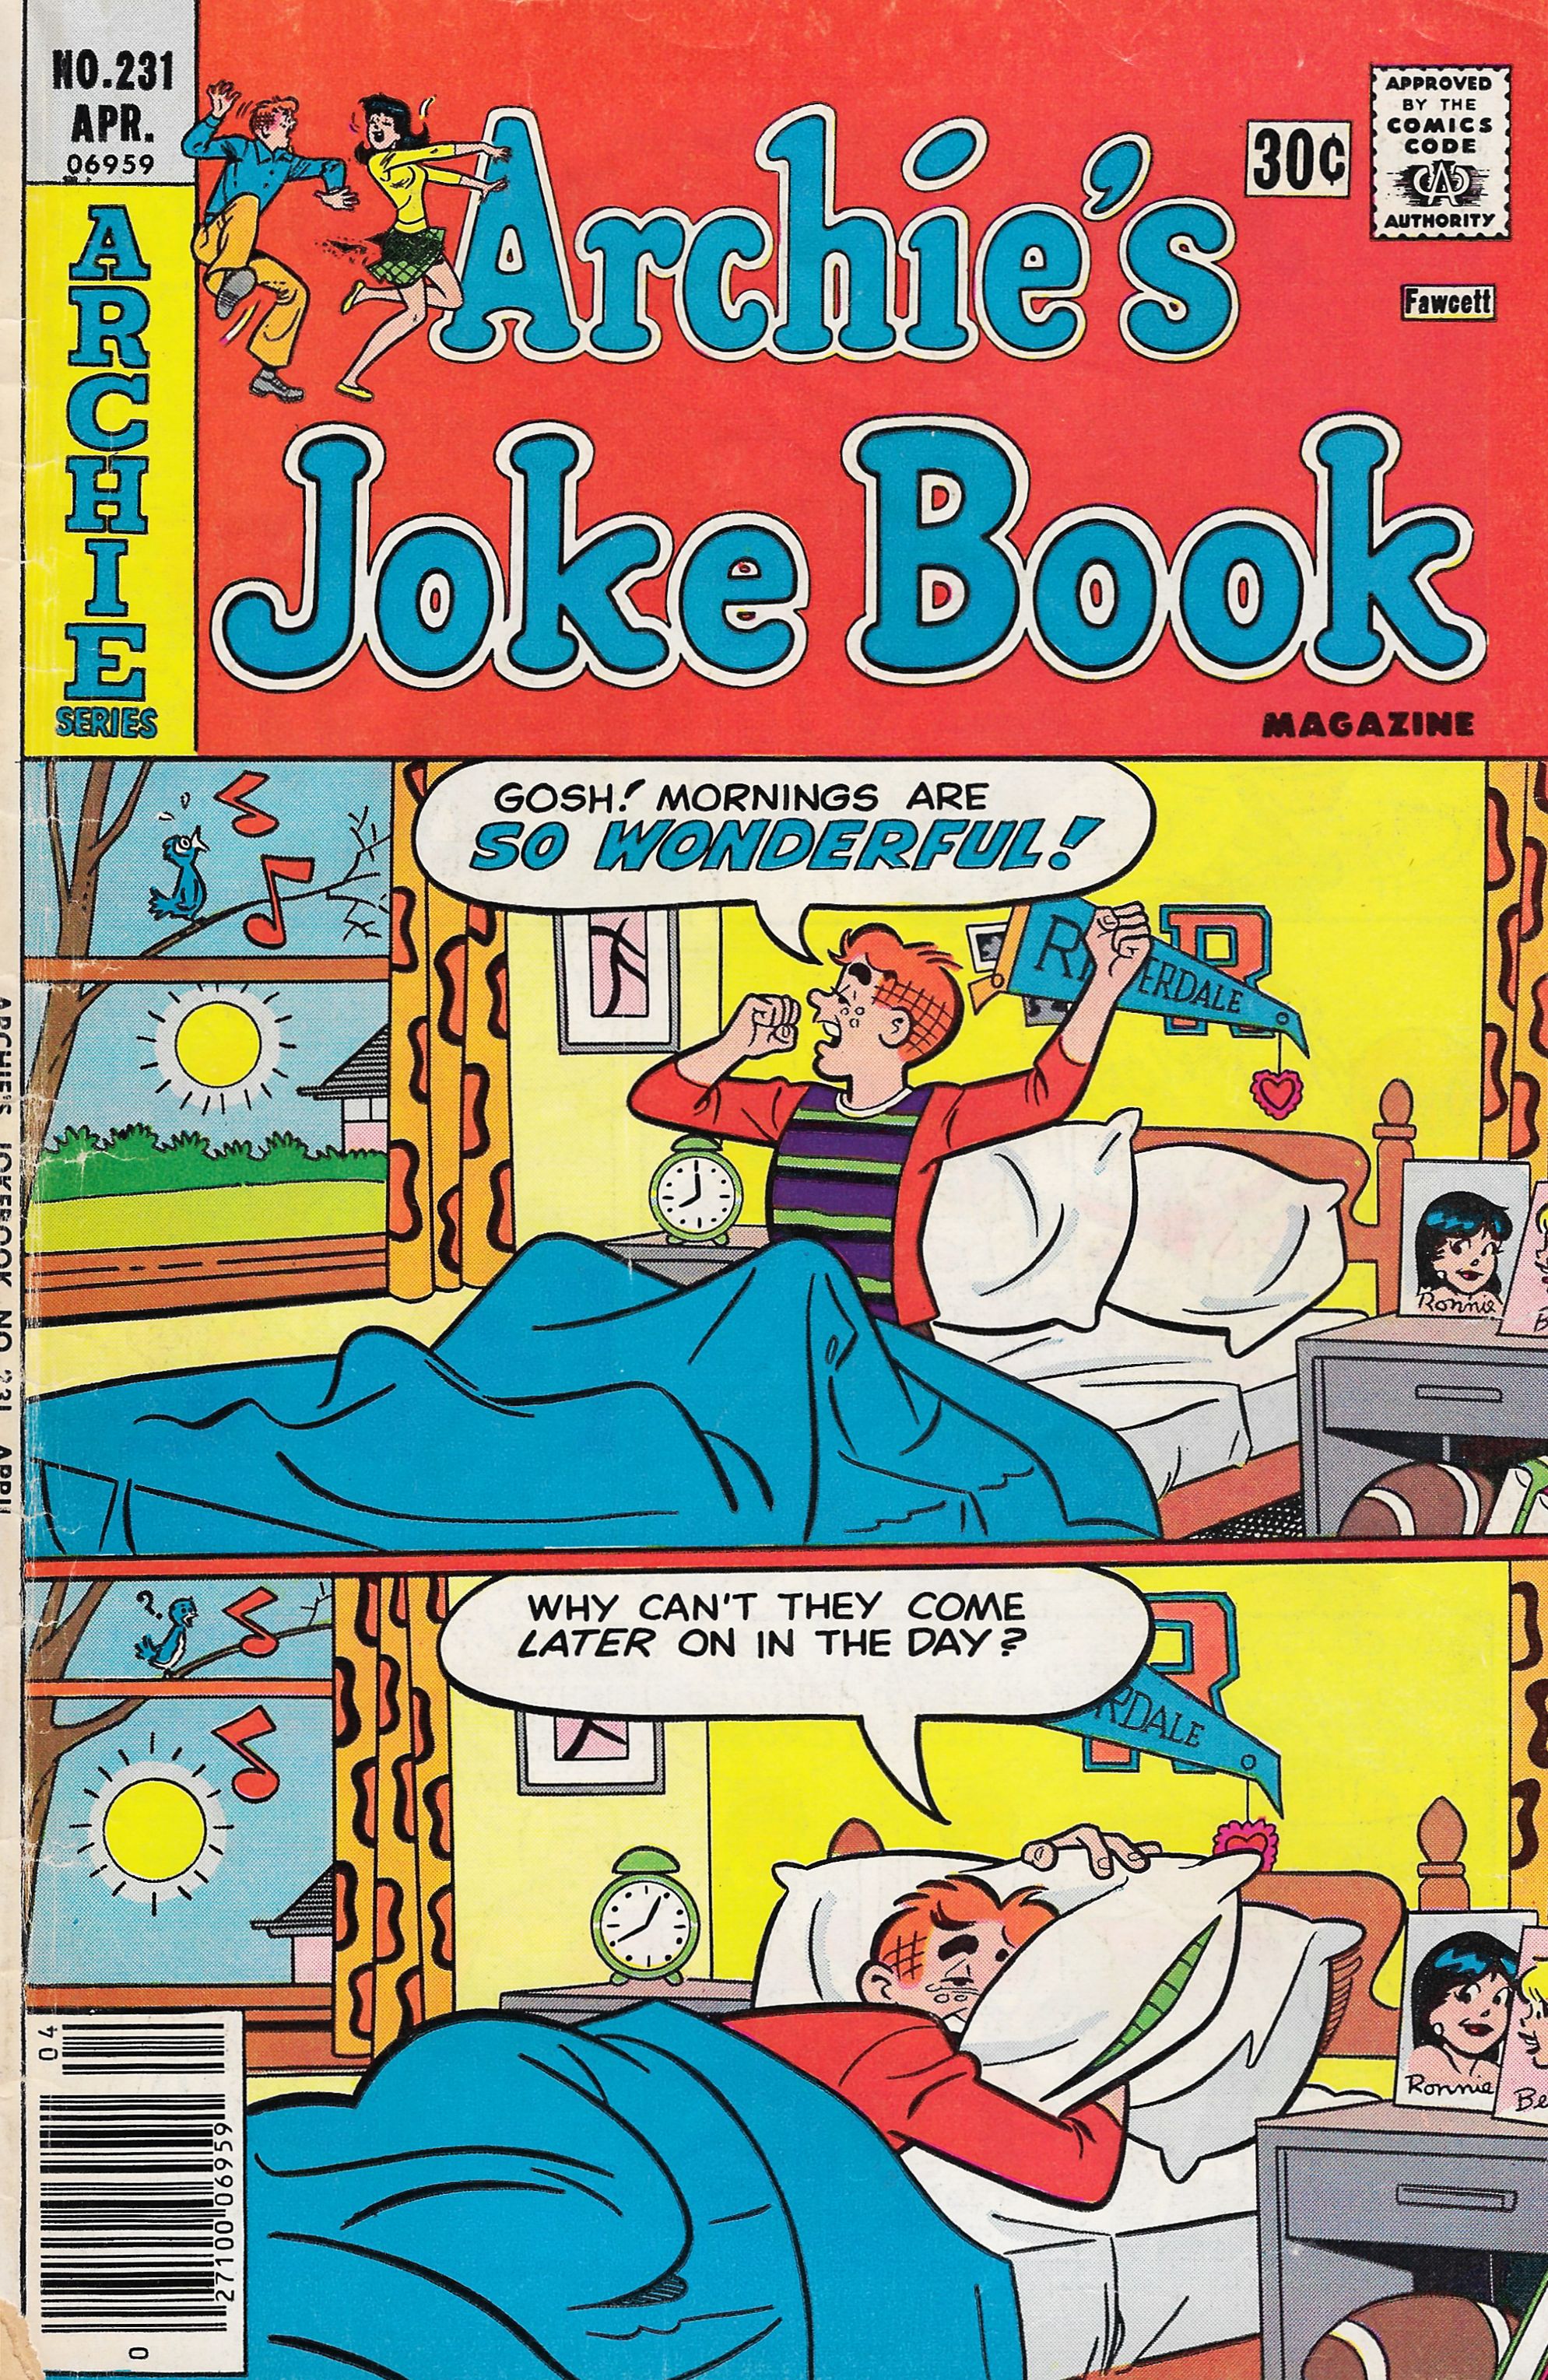 Read online Archie's Joke Book Magazine comic -  Issue #231 - 1